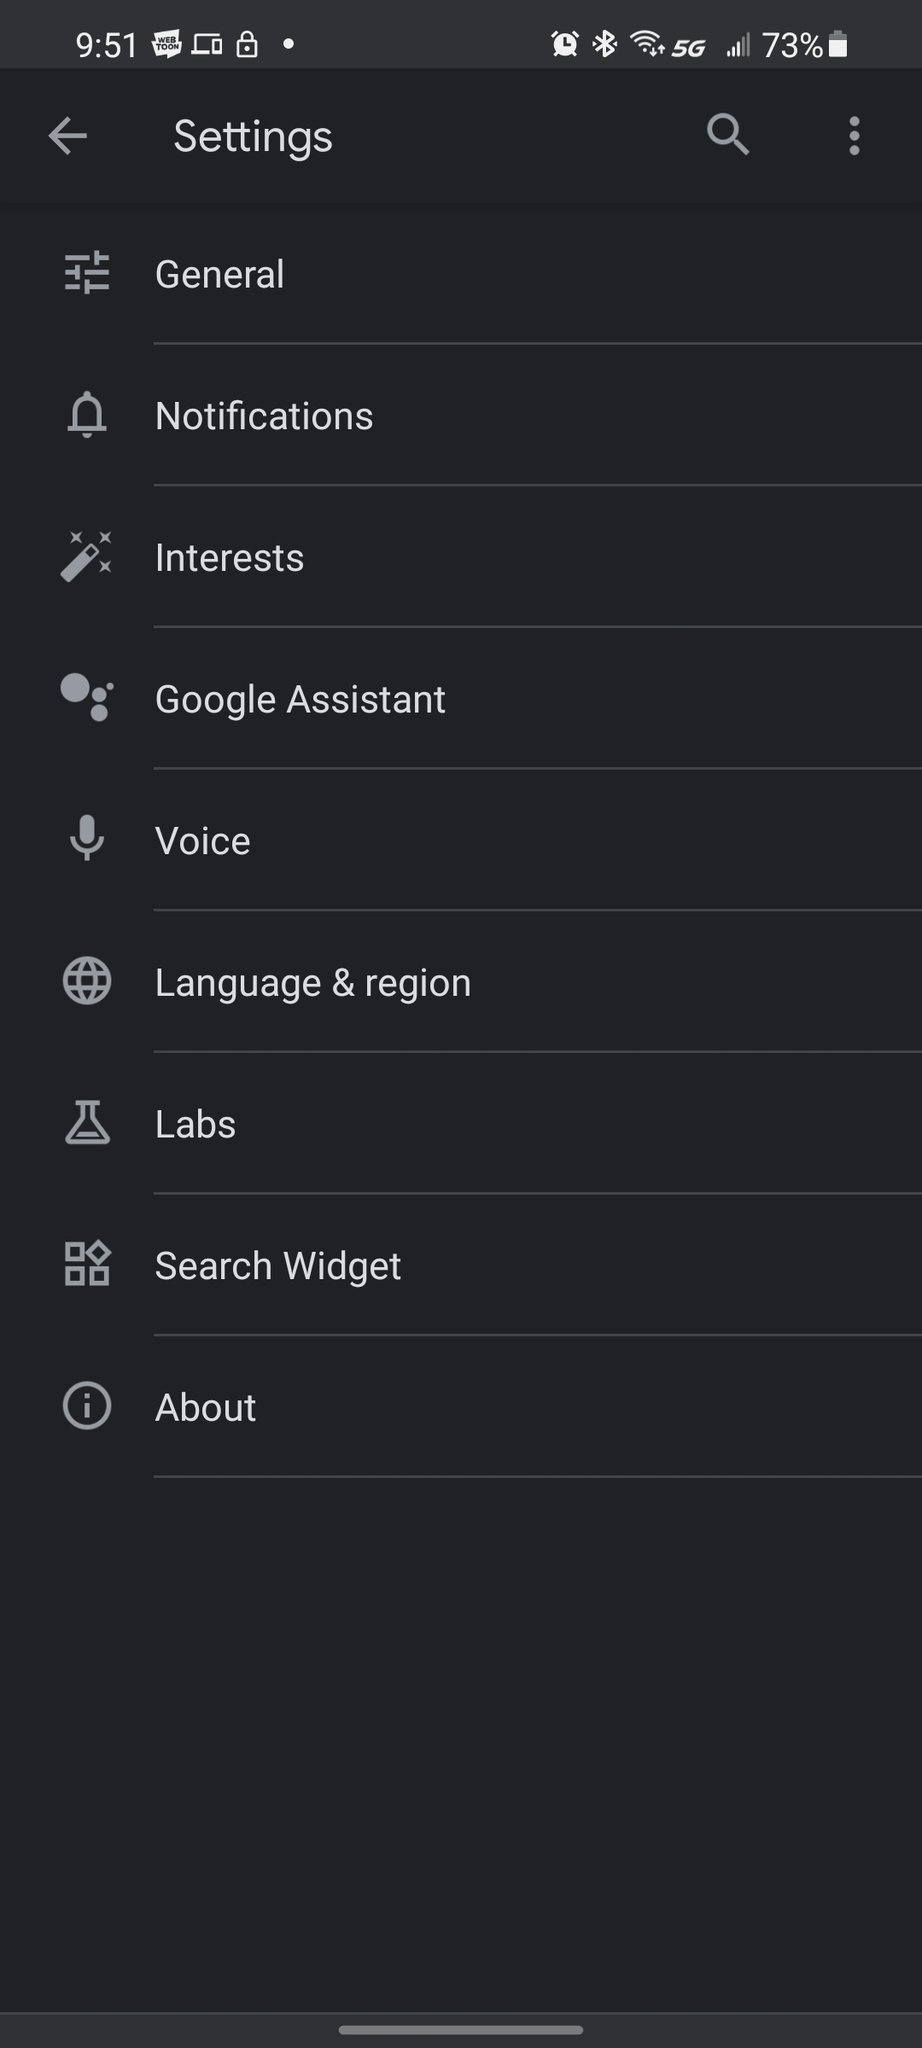 Google Assistant Settings In Google App